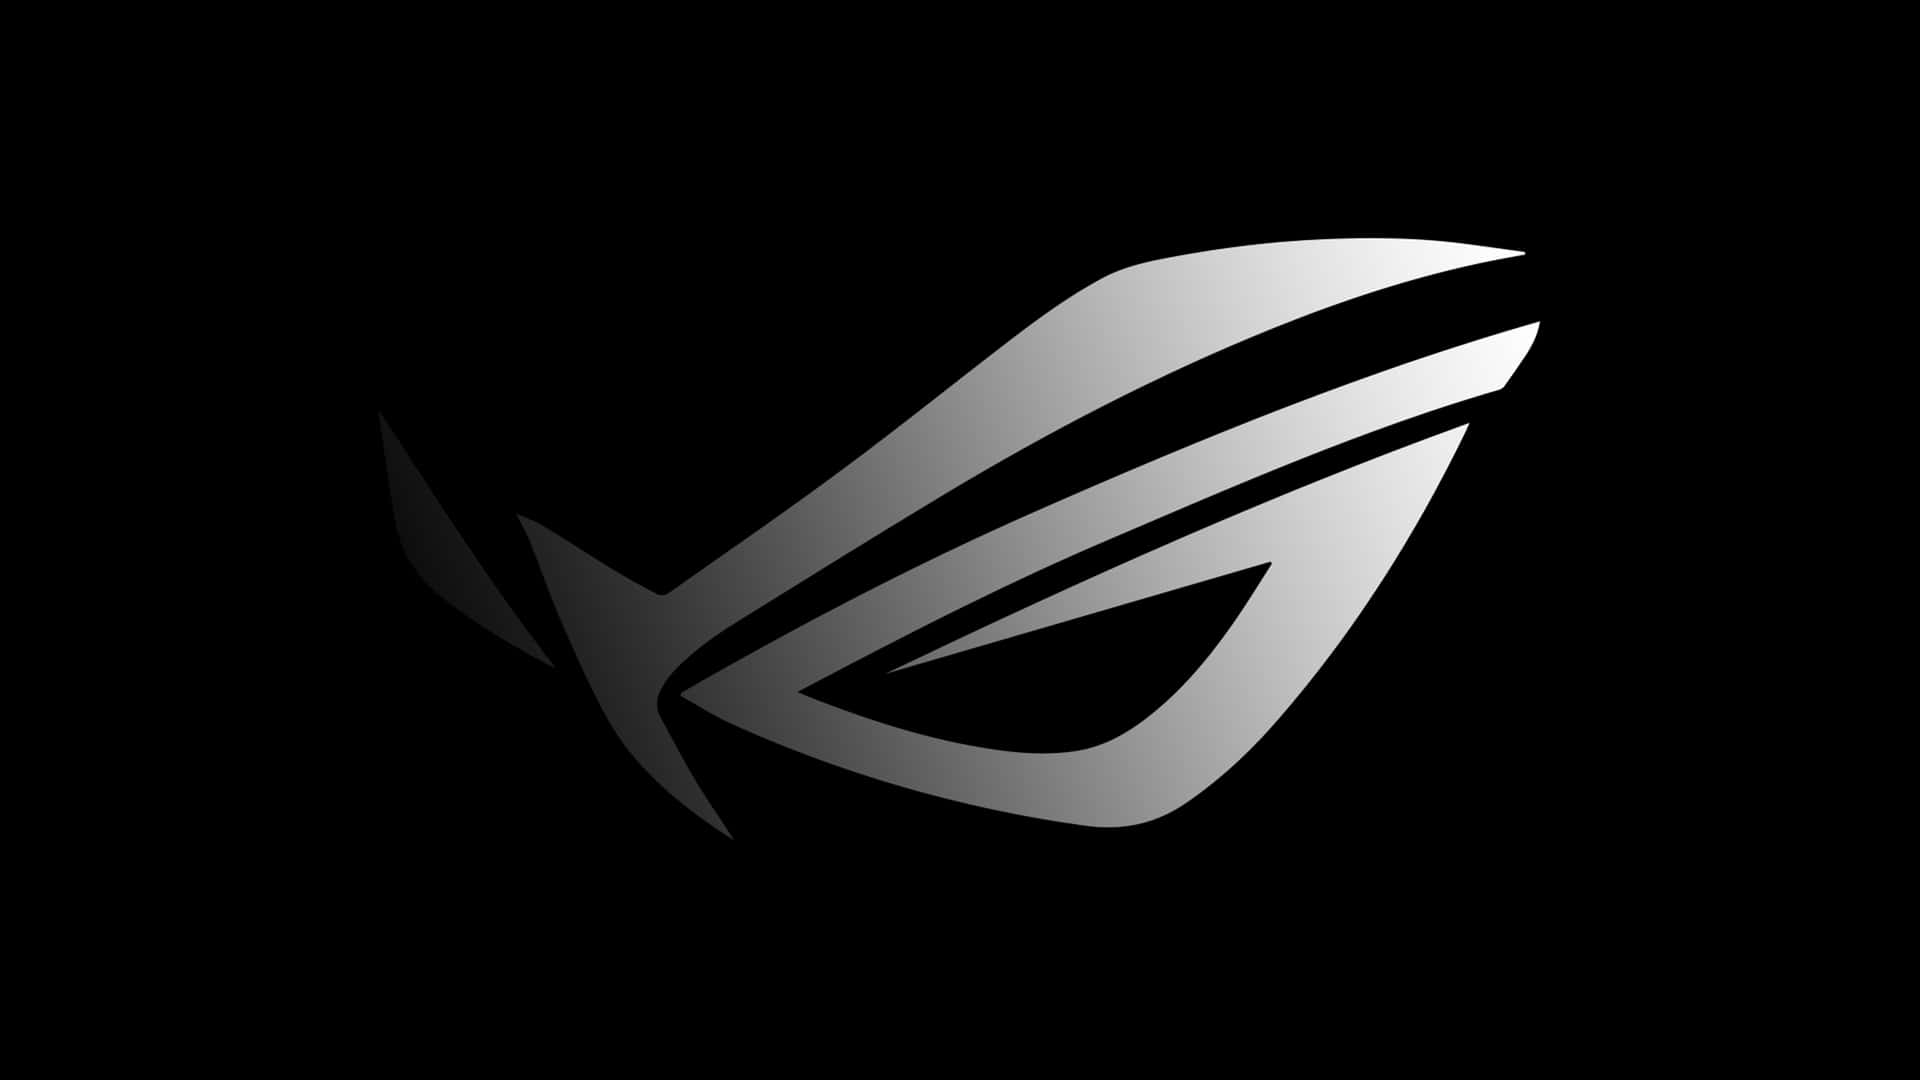 Asus R O G Logo Black Background